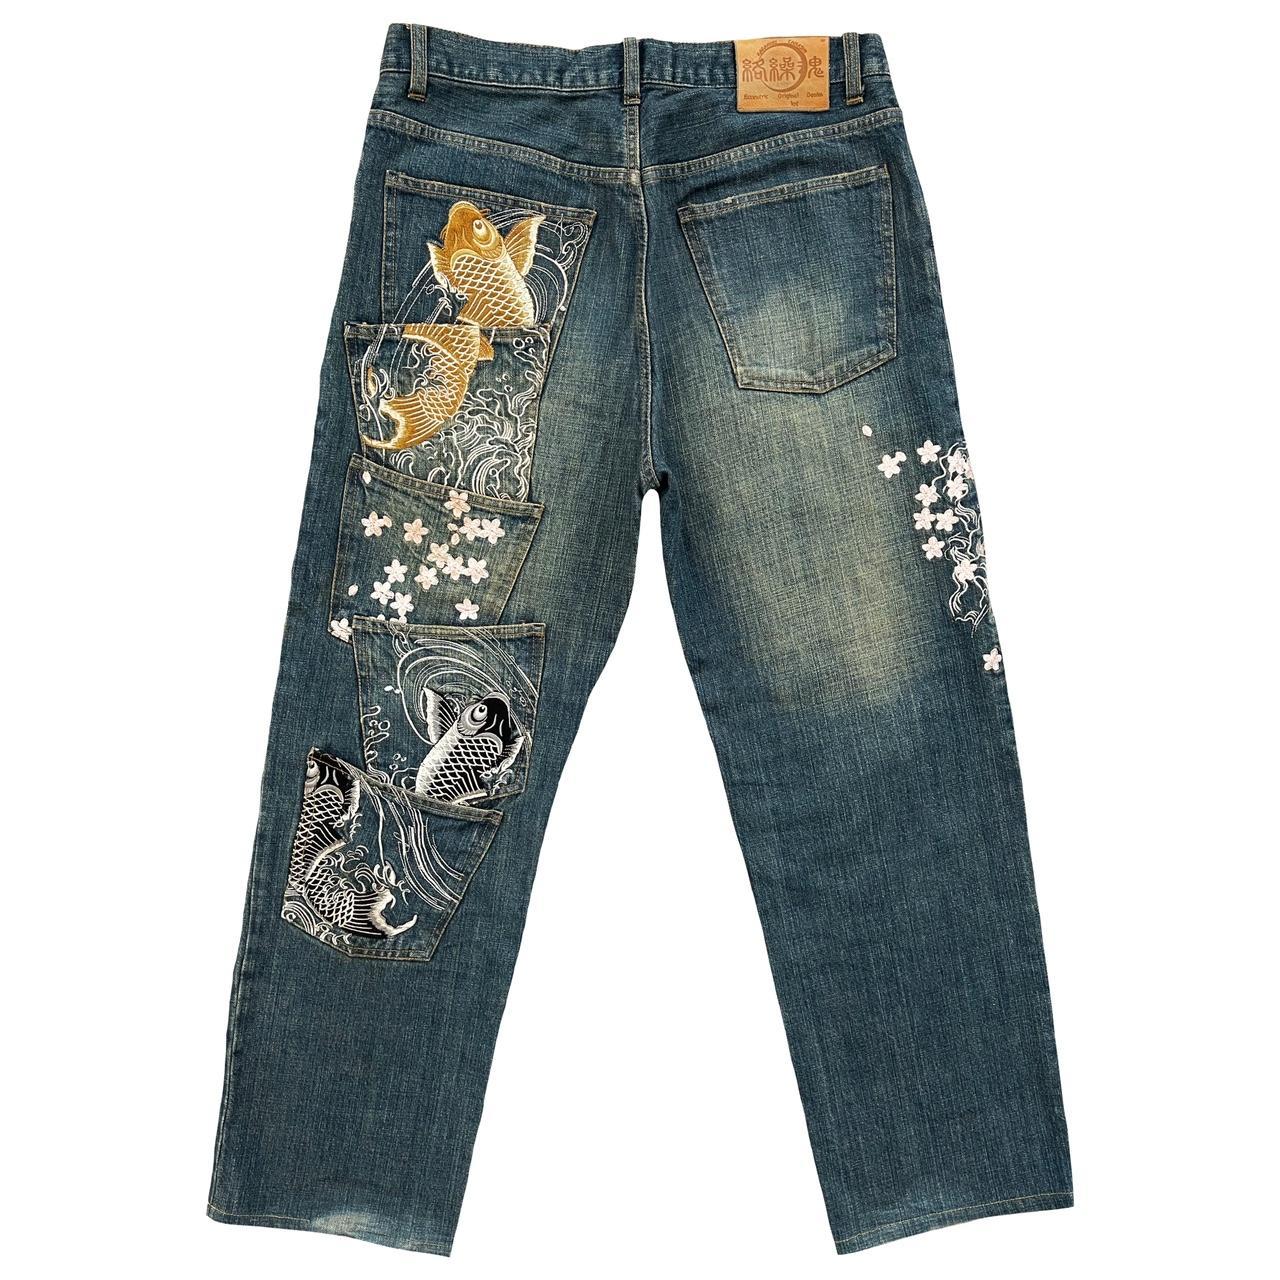 Karakuri Tamashii Jeans – The Holy Grail